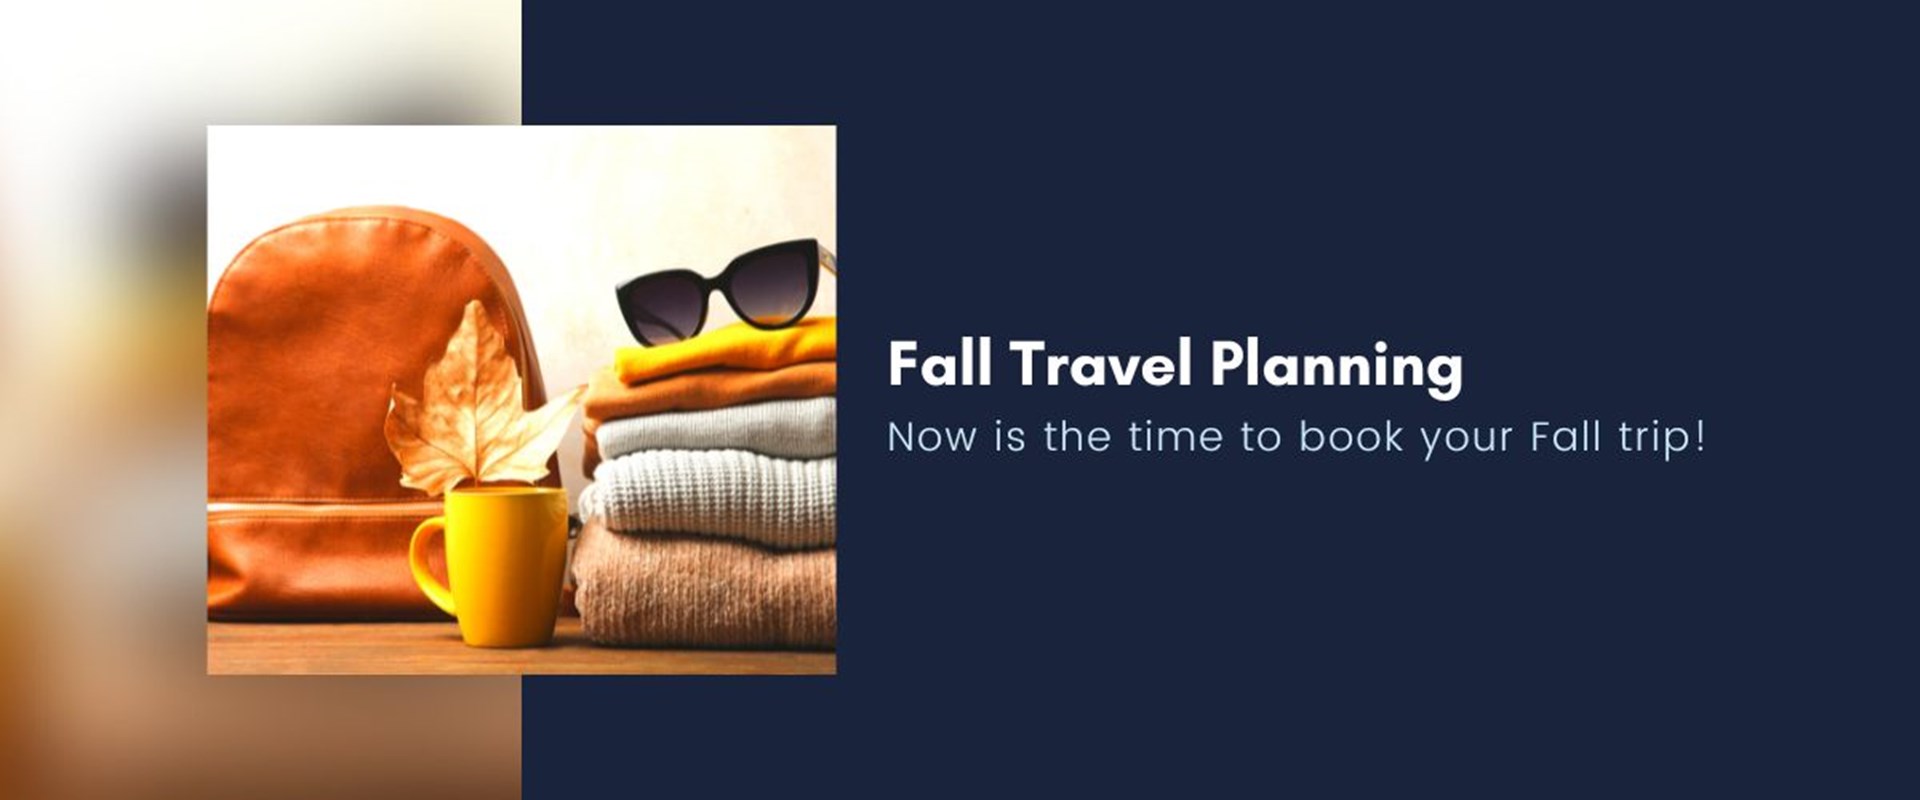 Fall Travel Planning